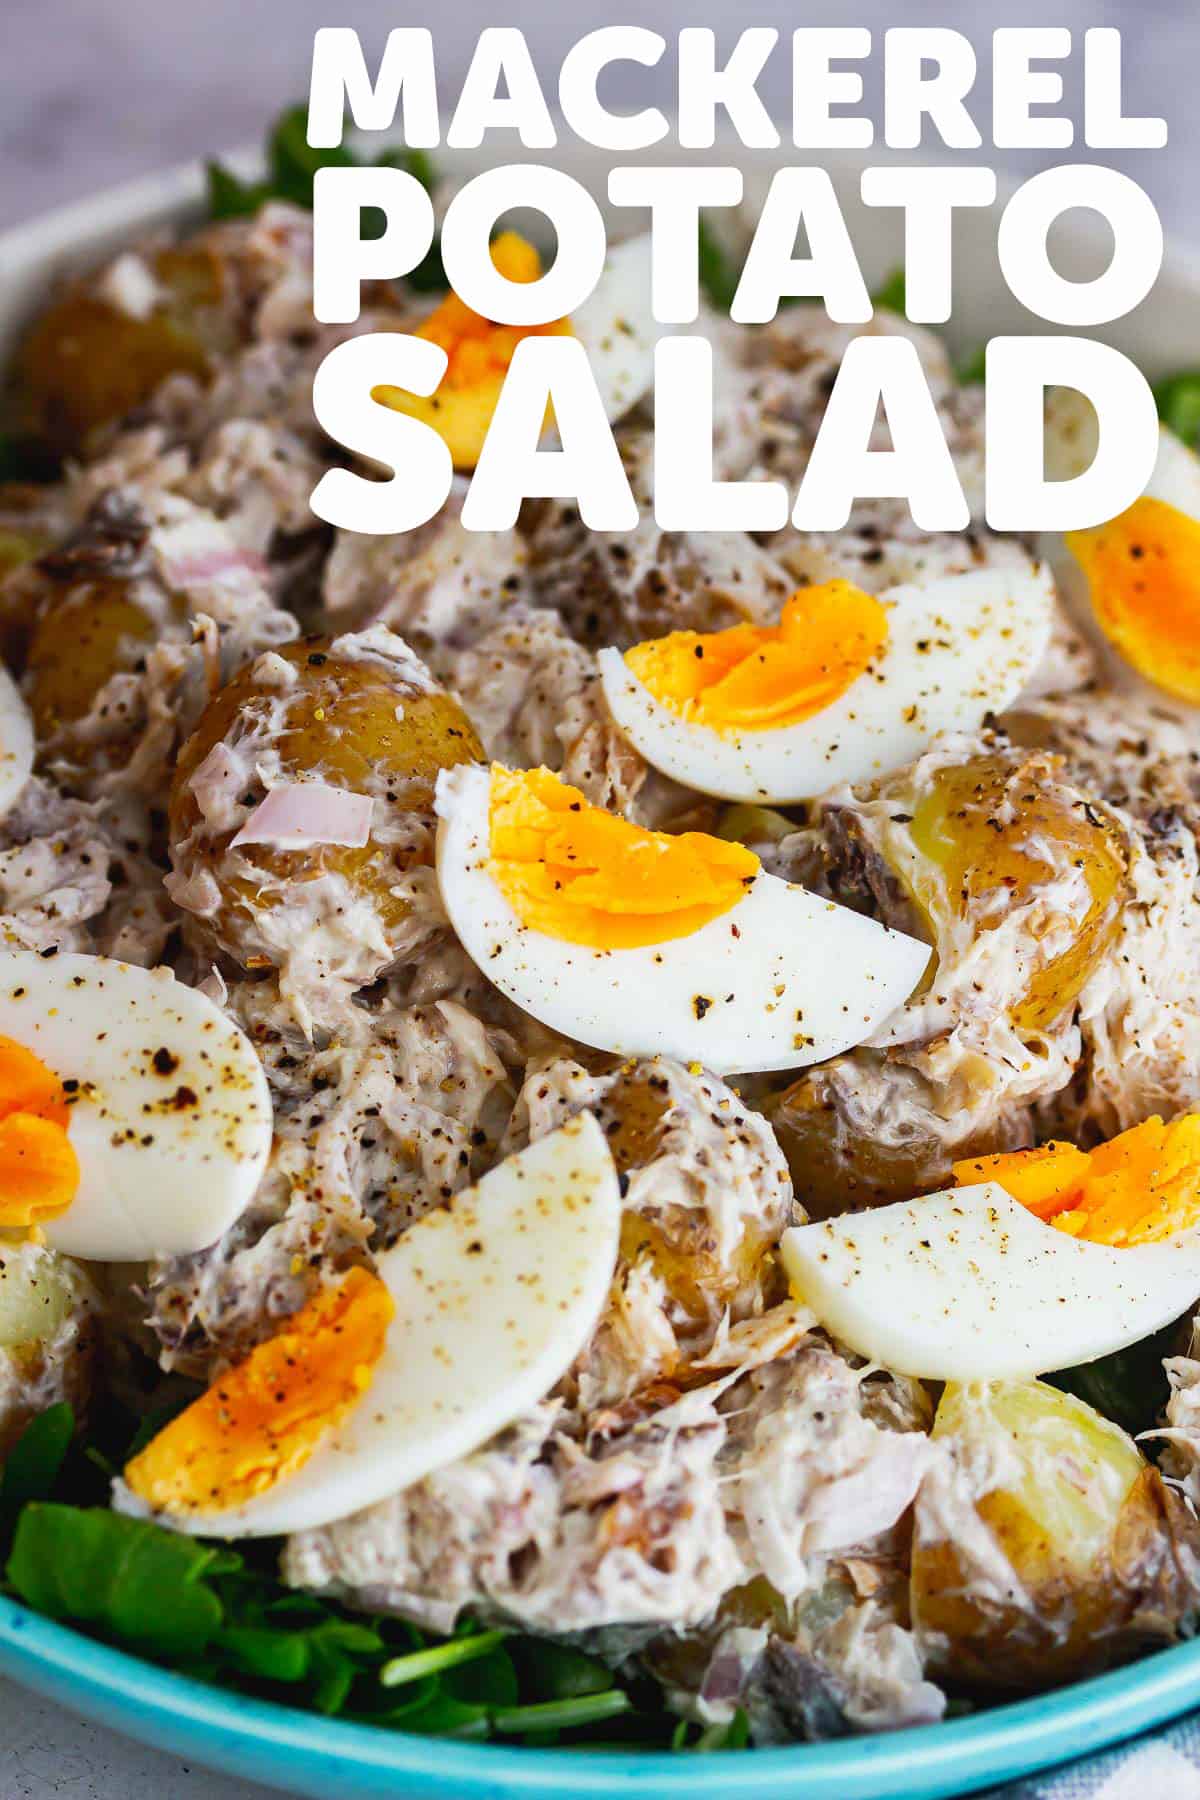 Pinterest image of mackerel potato salad with text overlay